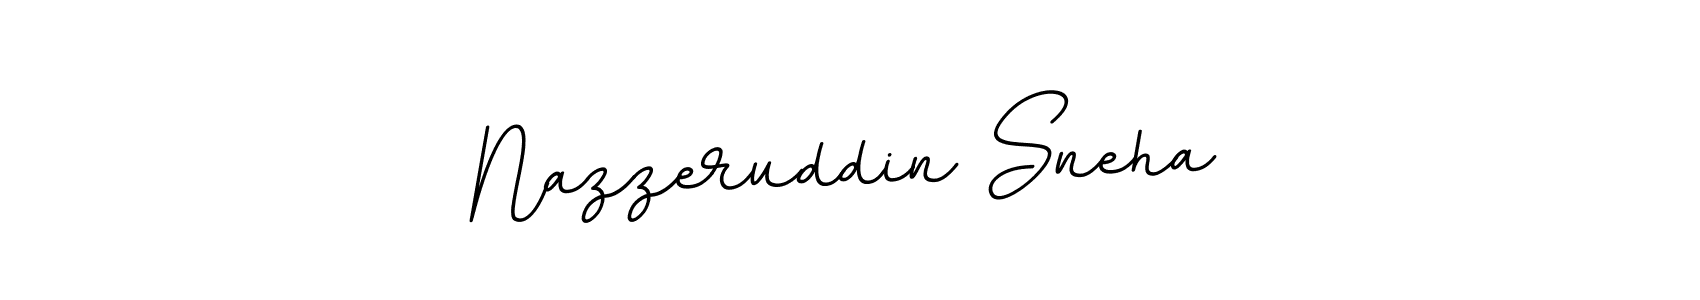 How to Draw Nazzeruddin Sneha signature style? BallpointsItalic-DORy9 is a latest design signature styles for name Nazzeruddin Sneha. Nazzeruddin Sneha signature style 11 images and pictures png